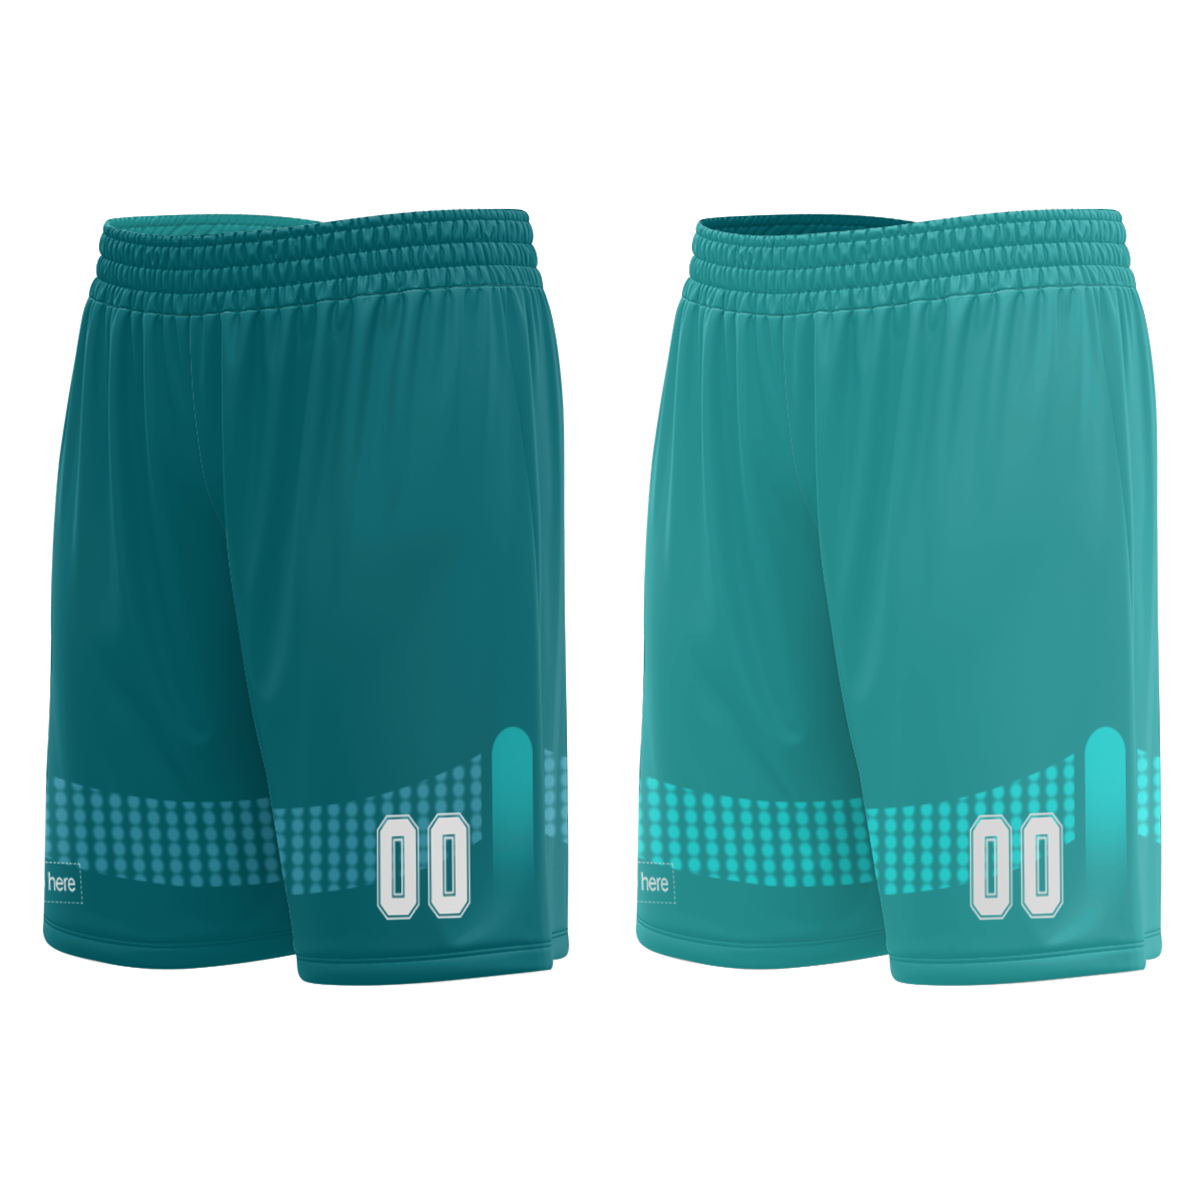 wholesale-professional-factory-sportswear-custom-print-on-demand-reversible-basketball-jersey-at-cj-pod-8